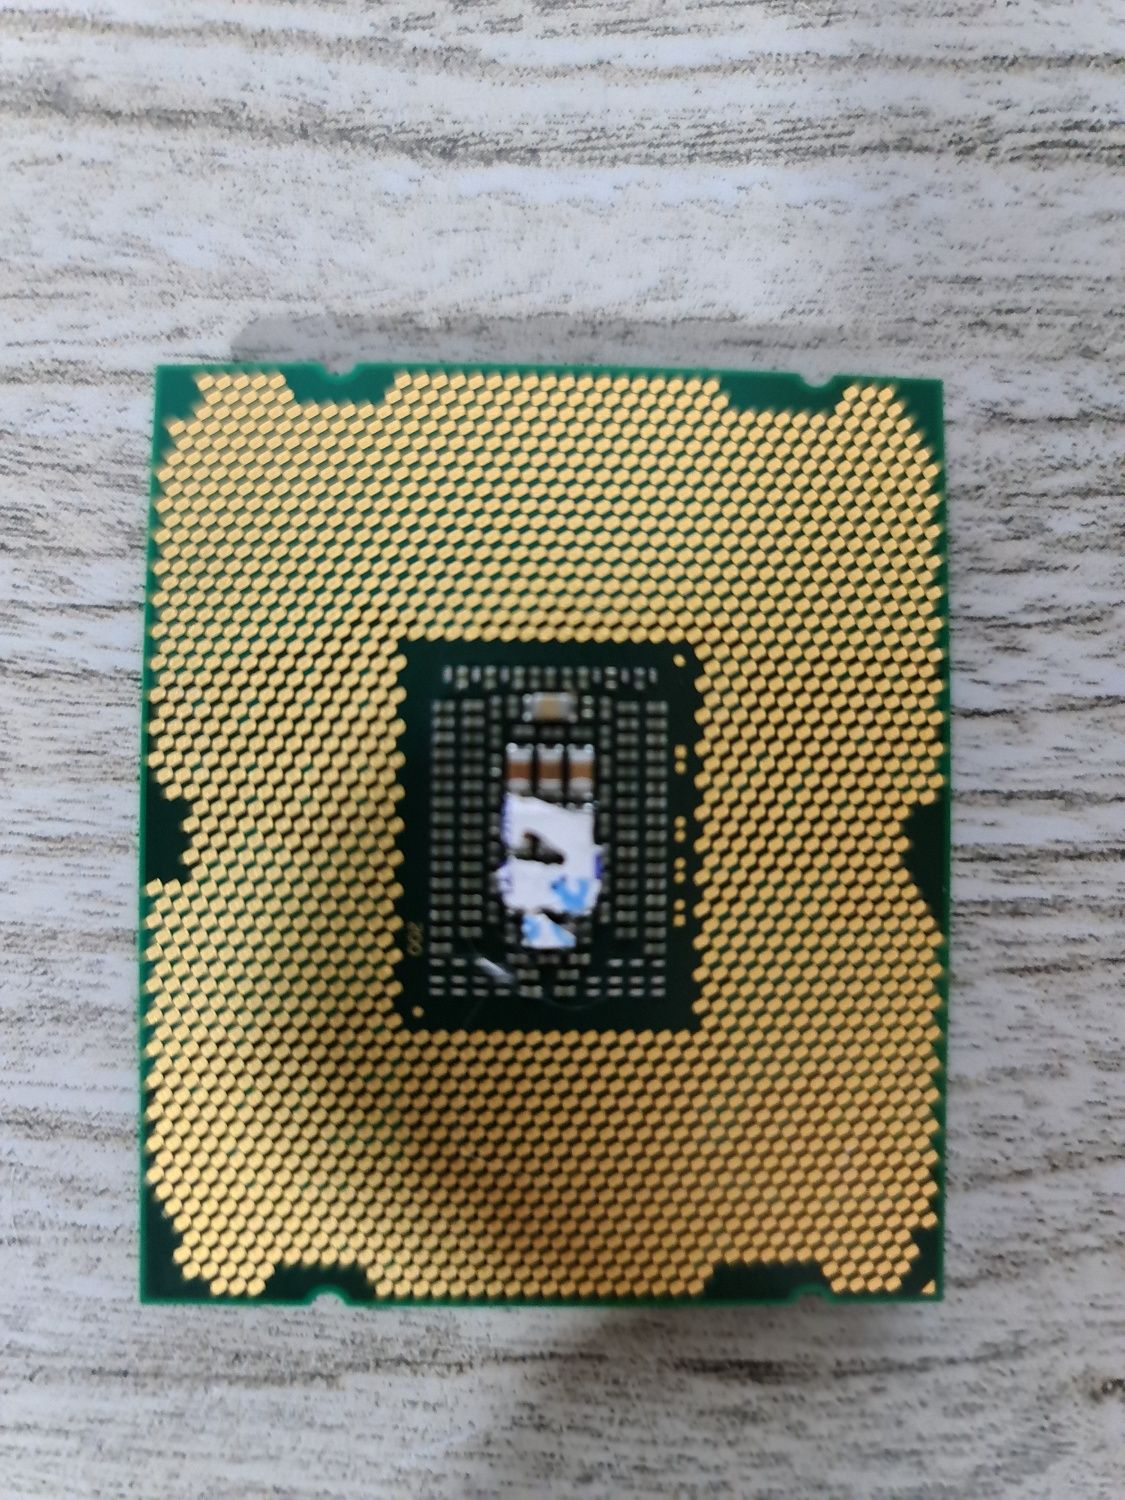 Процессор Core  i7 3930k.